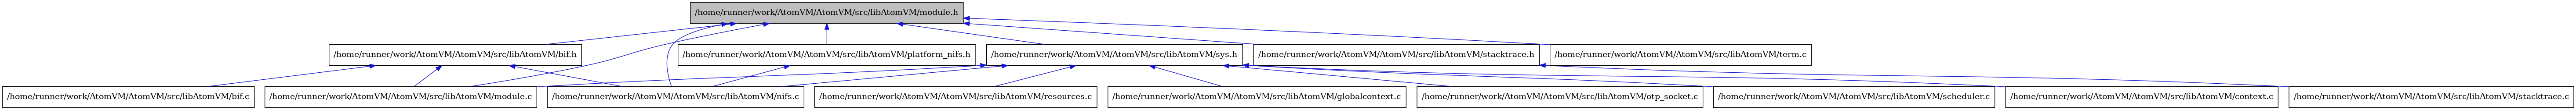 digraph {
    graph [bgcolor="#00000000"]
    node [shape=rectangle style=filled fillcolor="#FFFFFF" font=Helvetica padding=2]
    edge [color="#1414CE"]
    "3" [label="/home/runner/work/AtomVM/AtomVM/src/libAtomVM/bif.c" tooltip="/home/runner/work/AtomVM/AtomVM/src/libAtomVM/bif.c"]
    "2" [label="/home/runner/work/AtomVM/AtomVM/src/libAtomVM/bif.h" tooltip="/home/runner/work/AtomVM/AtomVM/src/libAtomVM/bif.h"]
    "6" [label="/home/runner/work/AtomVM/AtomVM/src/libAtomVM/platform_nifs.h" tooltip="/home/runner/work/AtomVM/AtomVM/src/libAtomVM/platform_nifs.h"]
    "14" [label="/home/runner/work/AtomVM/AtomVM/src/libAtomVM/scheduler.c" tooltip="/home/runner/work/AtomVM/AtomVM/src/libAtomVM/scheduler.c"]
    "10" [label="/home/runner/work/AtomVM/AtomVM/src/libAtomVM/context.c" tooltip="/home/runner/work/AtomVM/AtomVM/src/libAtomVM/context.c"]
    "8" [label="/home/runner/work/AtomVM/AtomVM/src/libAtomVM/stacktrace.c" tooltip="/home/runner/work/AtomVM/AtomVM/src/libAtomVM/stacktrace.c"]
    "7" [label="/home/runner/work/AtomVM/AtomVM/src/libAtomVM/stacktrace.h" tooltip="/home/runner/work/AtomVM/AtomVM/src/libAtomVM/stacktrace.h"]
    "4" [label="/home/runner/work/AtomVM/AtomVM/src/libAtomVM/module.c" tooltip="/home/runner/work/AtomVM/AtomVM/src/libAtomVM/module.c"]
    "1" [label="/home/runner/work/AtomVM/AtomVM/src/libAtomVM/module.h" tooltip="/home/runner/work/AtomVM/AtomVM/src/libAtomVM/module.h" fillcolor="#BFBFBF"]
    "15" [label="/home/runner/work/AtomVM/AtomVM/src/libAtomVM/term.c" tooltip="/home/runner/work/AtomVM/AtomVM/src/libAtomVM/term.c"]
    "13" [label="/home/runner/work/AtomVM/AtomVM/src/libAtomVM/resources.c" tooltip="/home/runner/work/AtomVM/AtomVM/src/libAtomVM/resources.c"]
    "9" [label="/home/runner/work/AtomVM/AtomVM/src/libAtomVM/sys.h" tooltip="/home/runner/work/AtomVM/AtomVM/src/libAtomVM/sys.h"]
    "5" [label="/home/runner/work/AtomVM/AtomVM/src/libAtomVM/nifs.c" tooltip="/home/runner/work/AtomVM/AtomVM/src/libAtomVM/nifs.c"]
    "11" [label="/home/runner/work/AtomVM/AtomVM/src/libAtomVM/globalcontext.c" tooltip="/home/runner/work/AtomVM/AtomVM/src/libAtomVM/globalcontext.c"]
    "12" [label="/home/runner/work/AtomVM/AtomVM/src/libAtomVM/otp_socket.c" tooltip="/home/runner/work/AtomVM/AtomVM/src/libAtomVM/otp_socket.c"]
    "2" -> "3" [dir=back tooltip="include"]
    "2" -> "4" [dir=back tooltip="include"]
    "2" -> "5" [dir=back tooltip="include"]
    "6" -> "5" [dir=back tooltip="include"]
    "7" -> "8" [dir=back tooltip="include"]
    "1" -> "2" [dir=back tooltip="include"]
    "1" -> "4" [dir=back tooltip="include"]
    "1" -> "5" [dir=back tooltip="include"]
    "1" -> "6" [dir=back tooltip="include"]
    "1" -> "7" [dir=back tooltip="include"]
    "1" -> "9" [dir=back tooltip="include"]
    "1" -> "15" [dir=back tooltip="include"]
    "9" -> "10" [dir=back tooltip="include"]
    "9" -> "11" [dir=back tooltip="include"]
    "9" -> "4" [dir=back tooltip="include"]
    "9" -> "5" [dir=back tooltip="include"]
    "9" -> "12" [dir=back tooltip="include"]
    "9" -> "13" [dir=back tooltip="include"]
    "9" -> "14" [dir=back tooltip="include"]
}